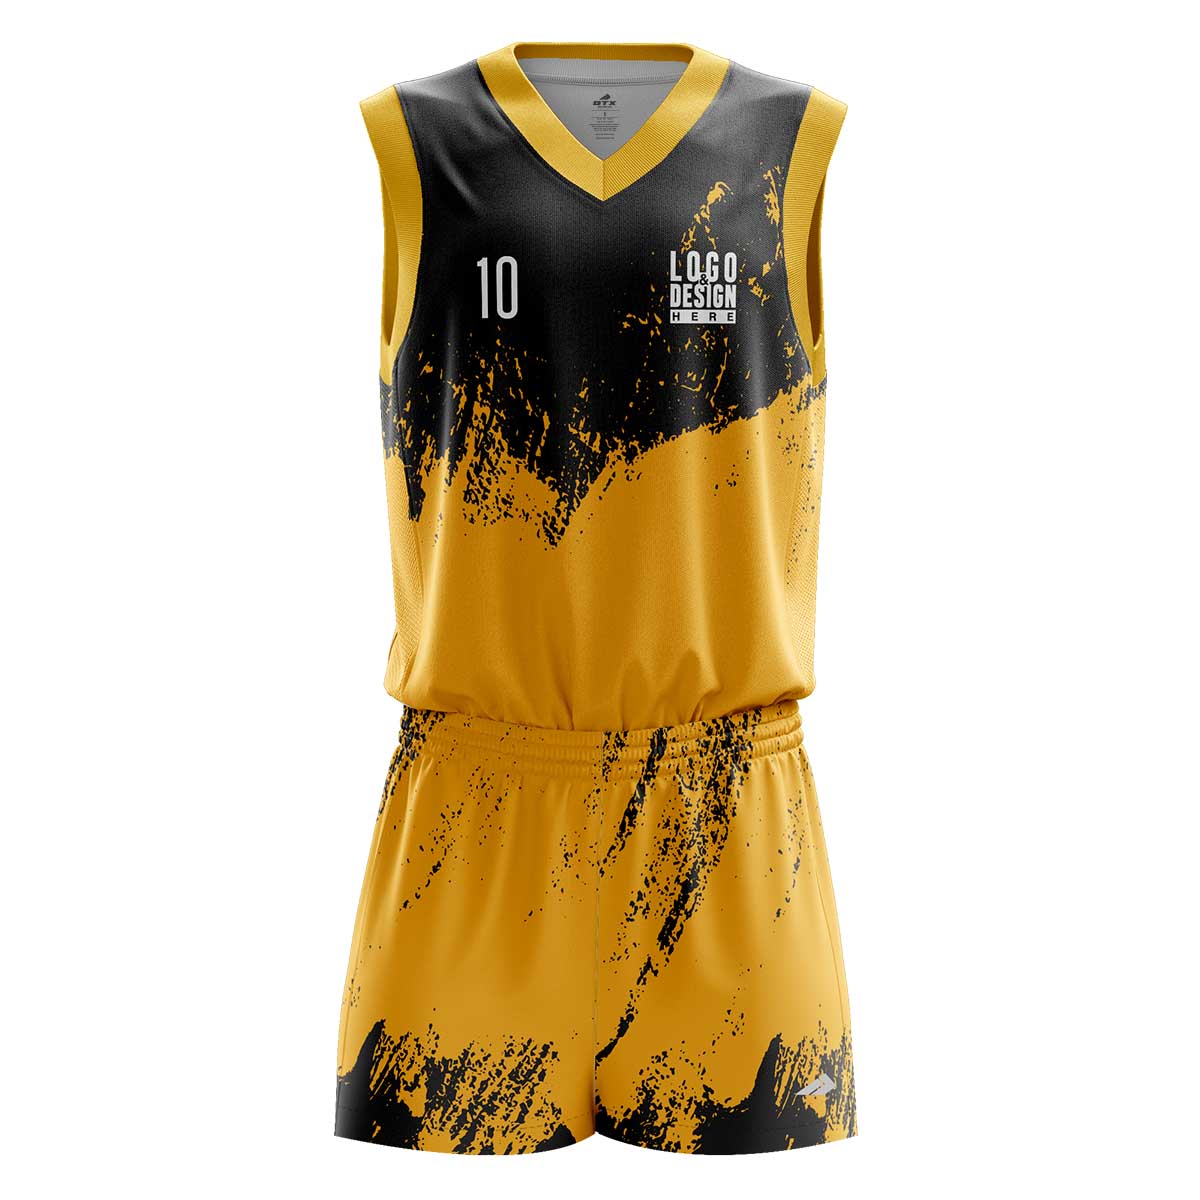 basketball jersey design latest